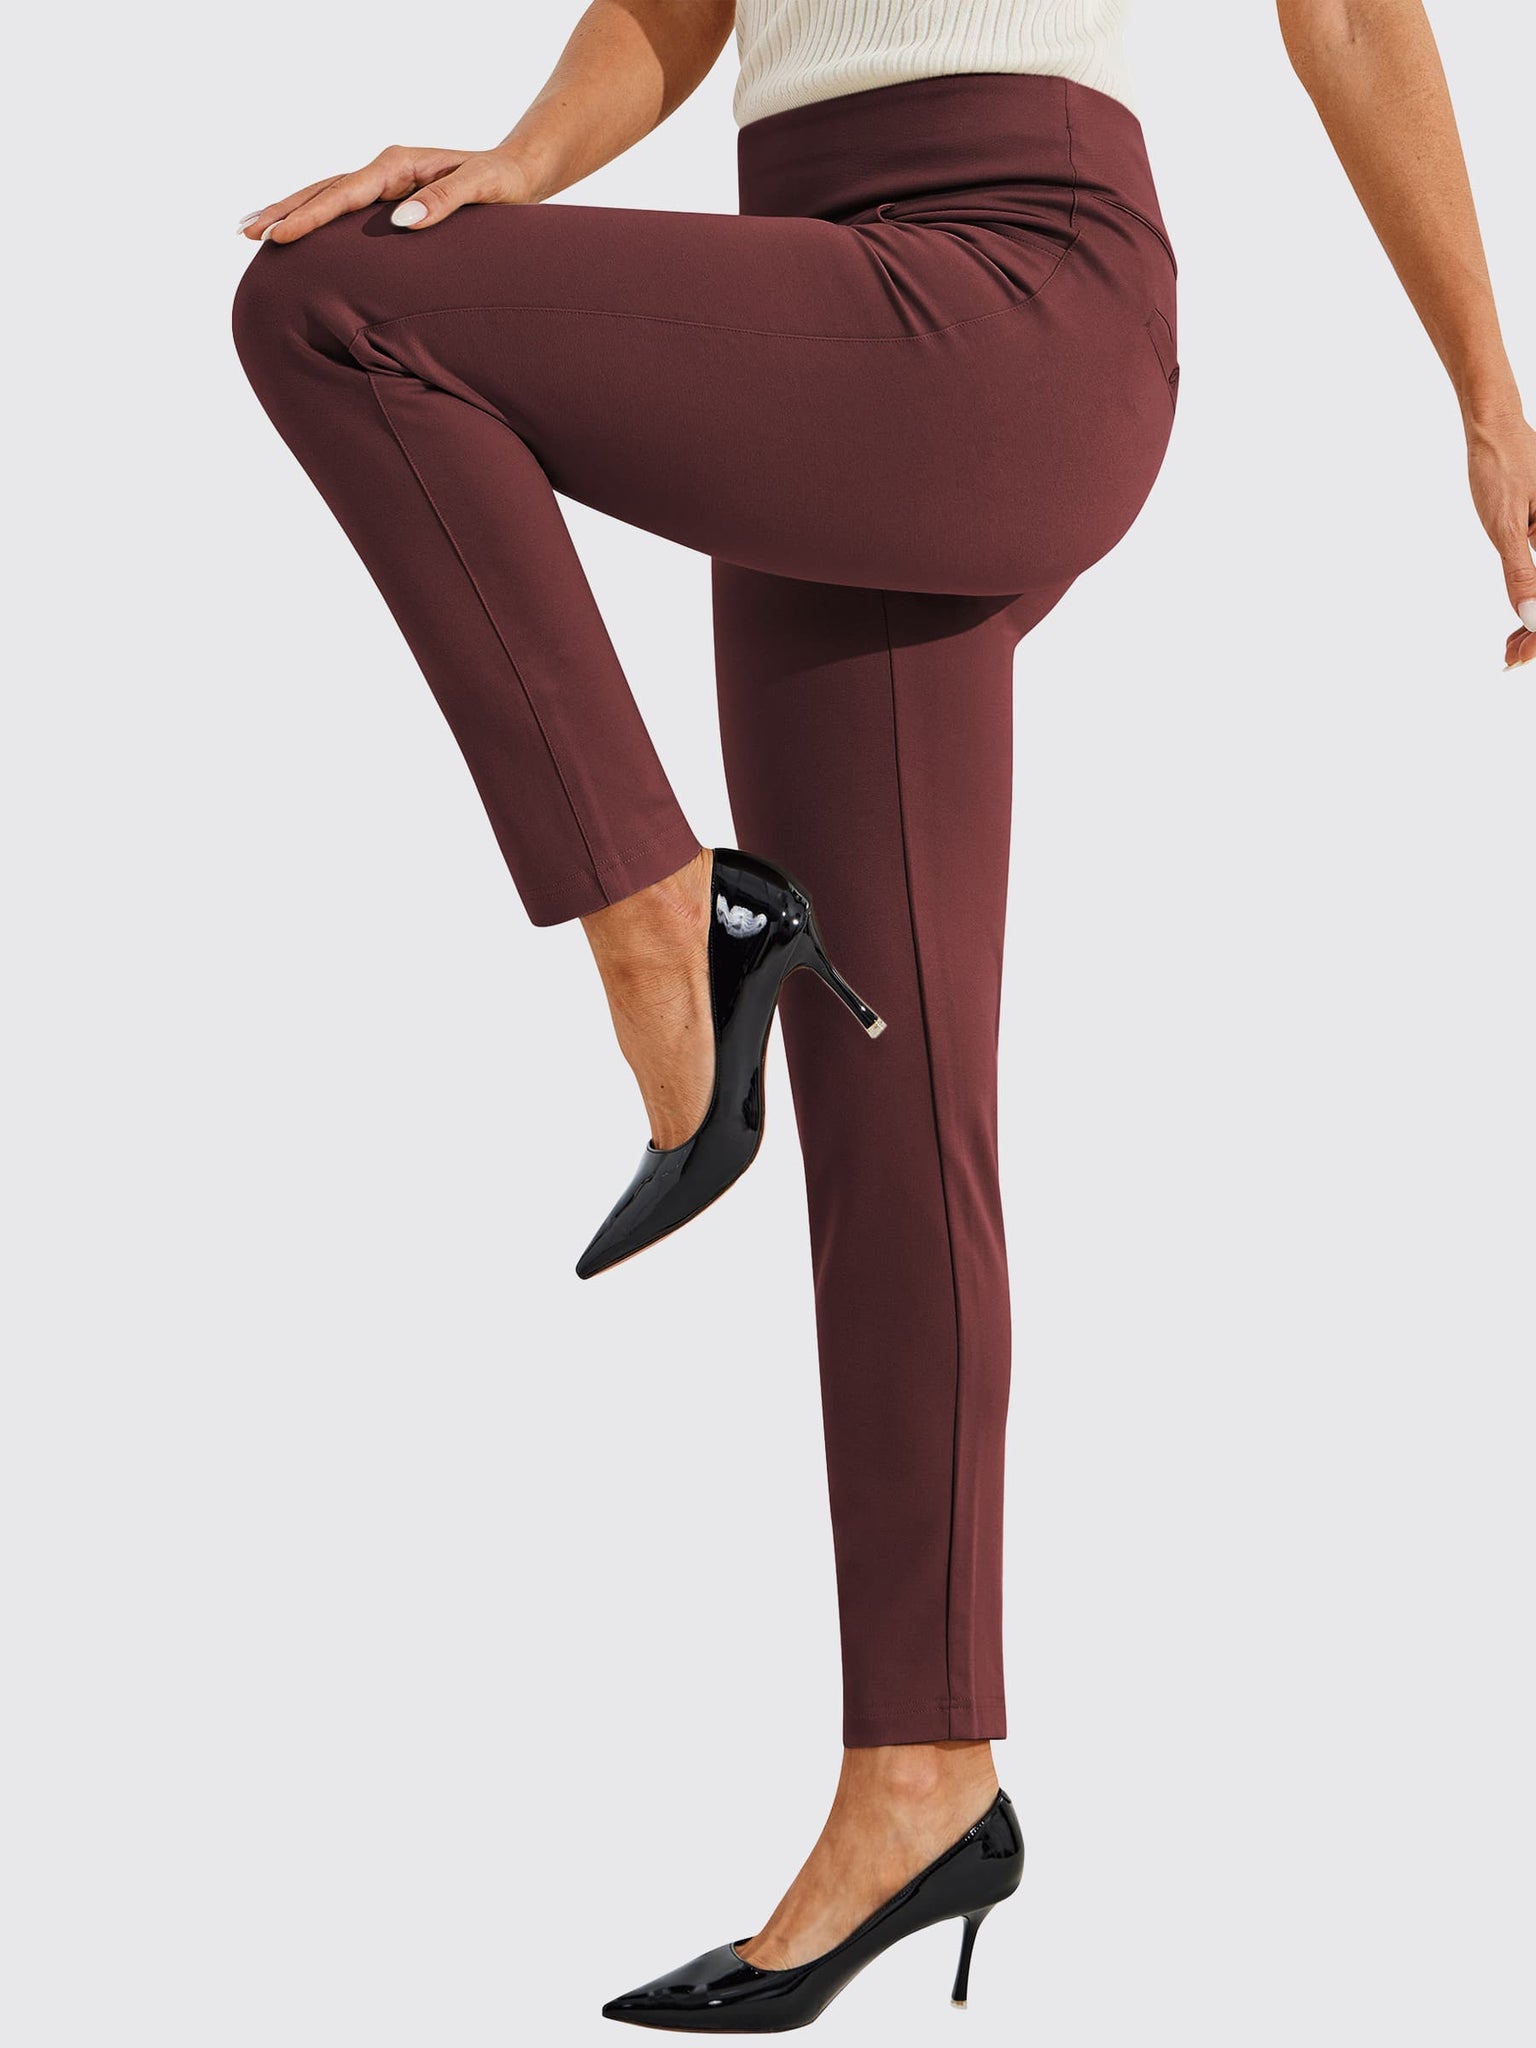 WILLIT Women's Size Small Yoga Dress Pants/Slim Fit/ Stretch